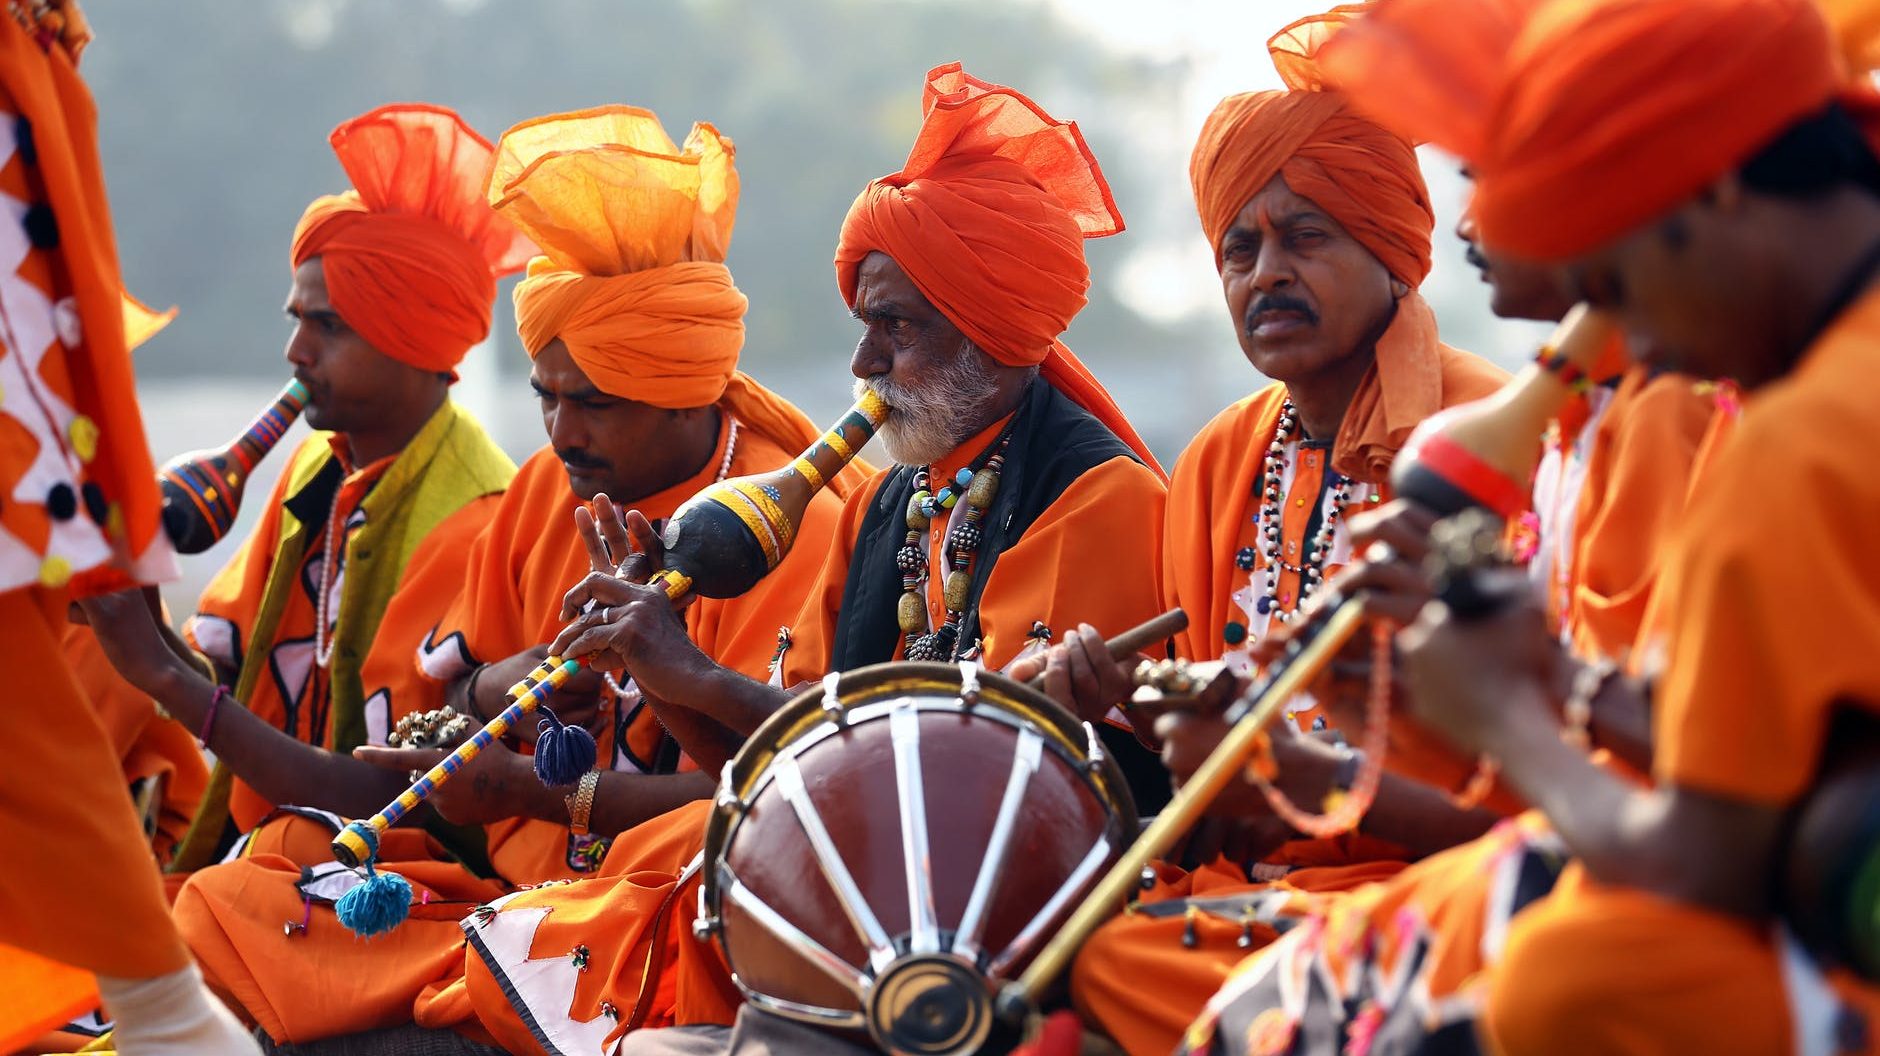 men in orange costumes playing instruments